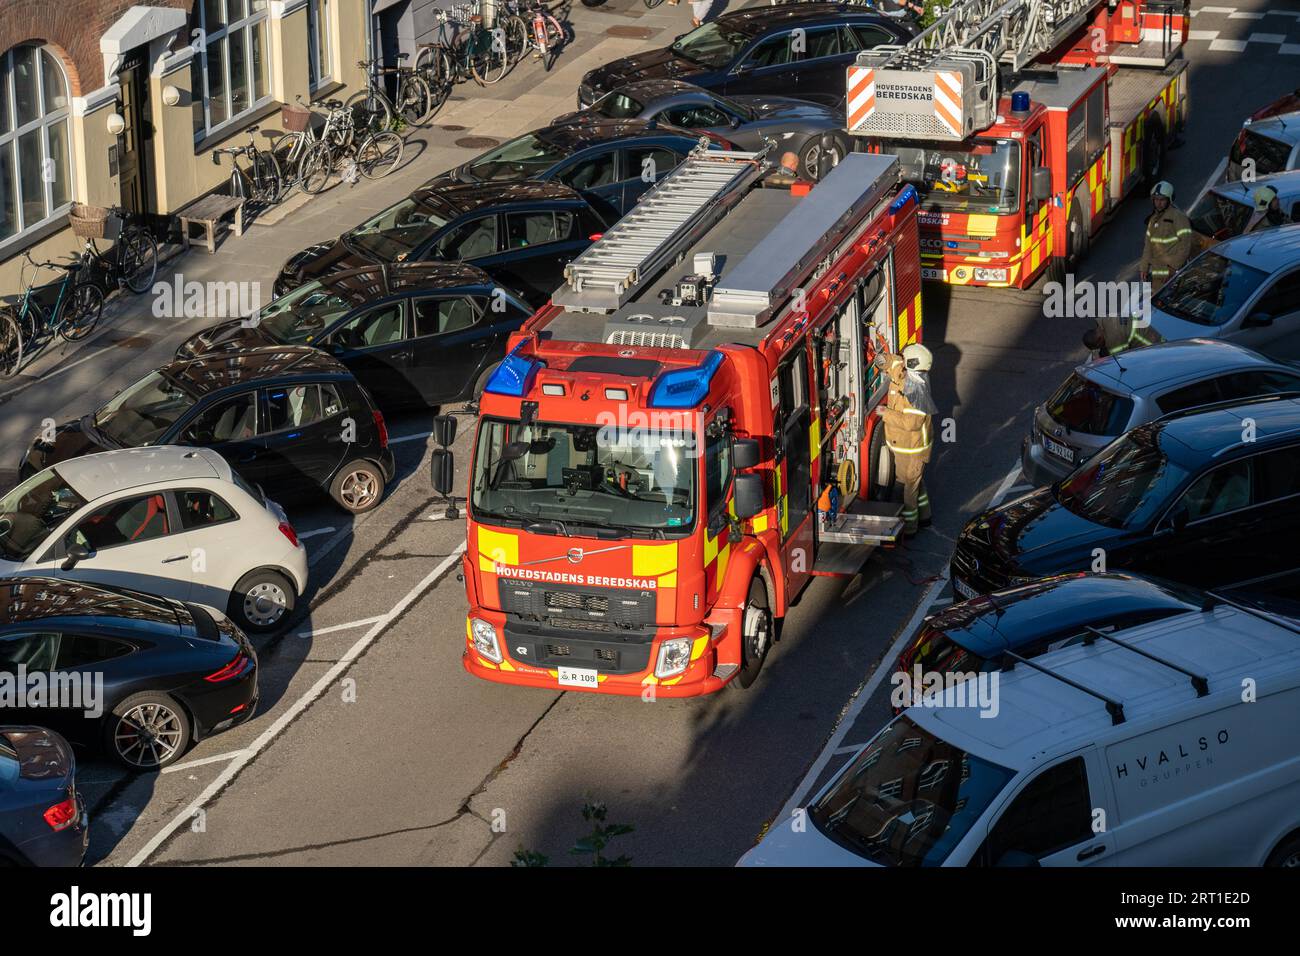 Copenhagen, Denmark, September 01, 2021: High angle view of fire trucks parked in a street Stock Photo